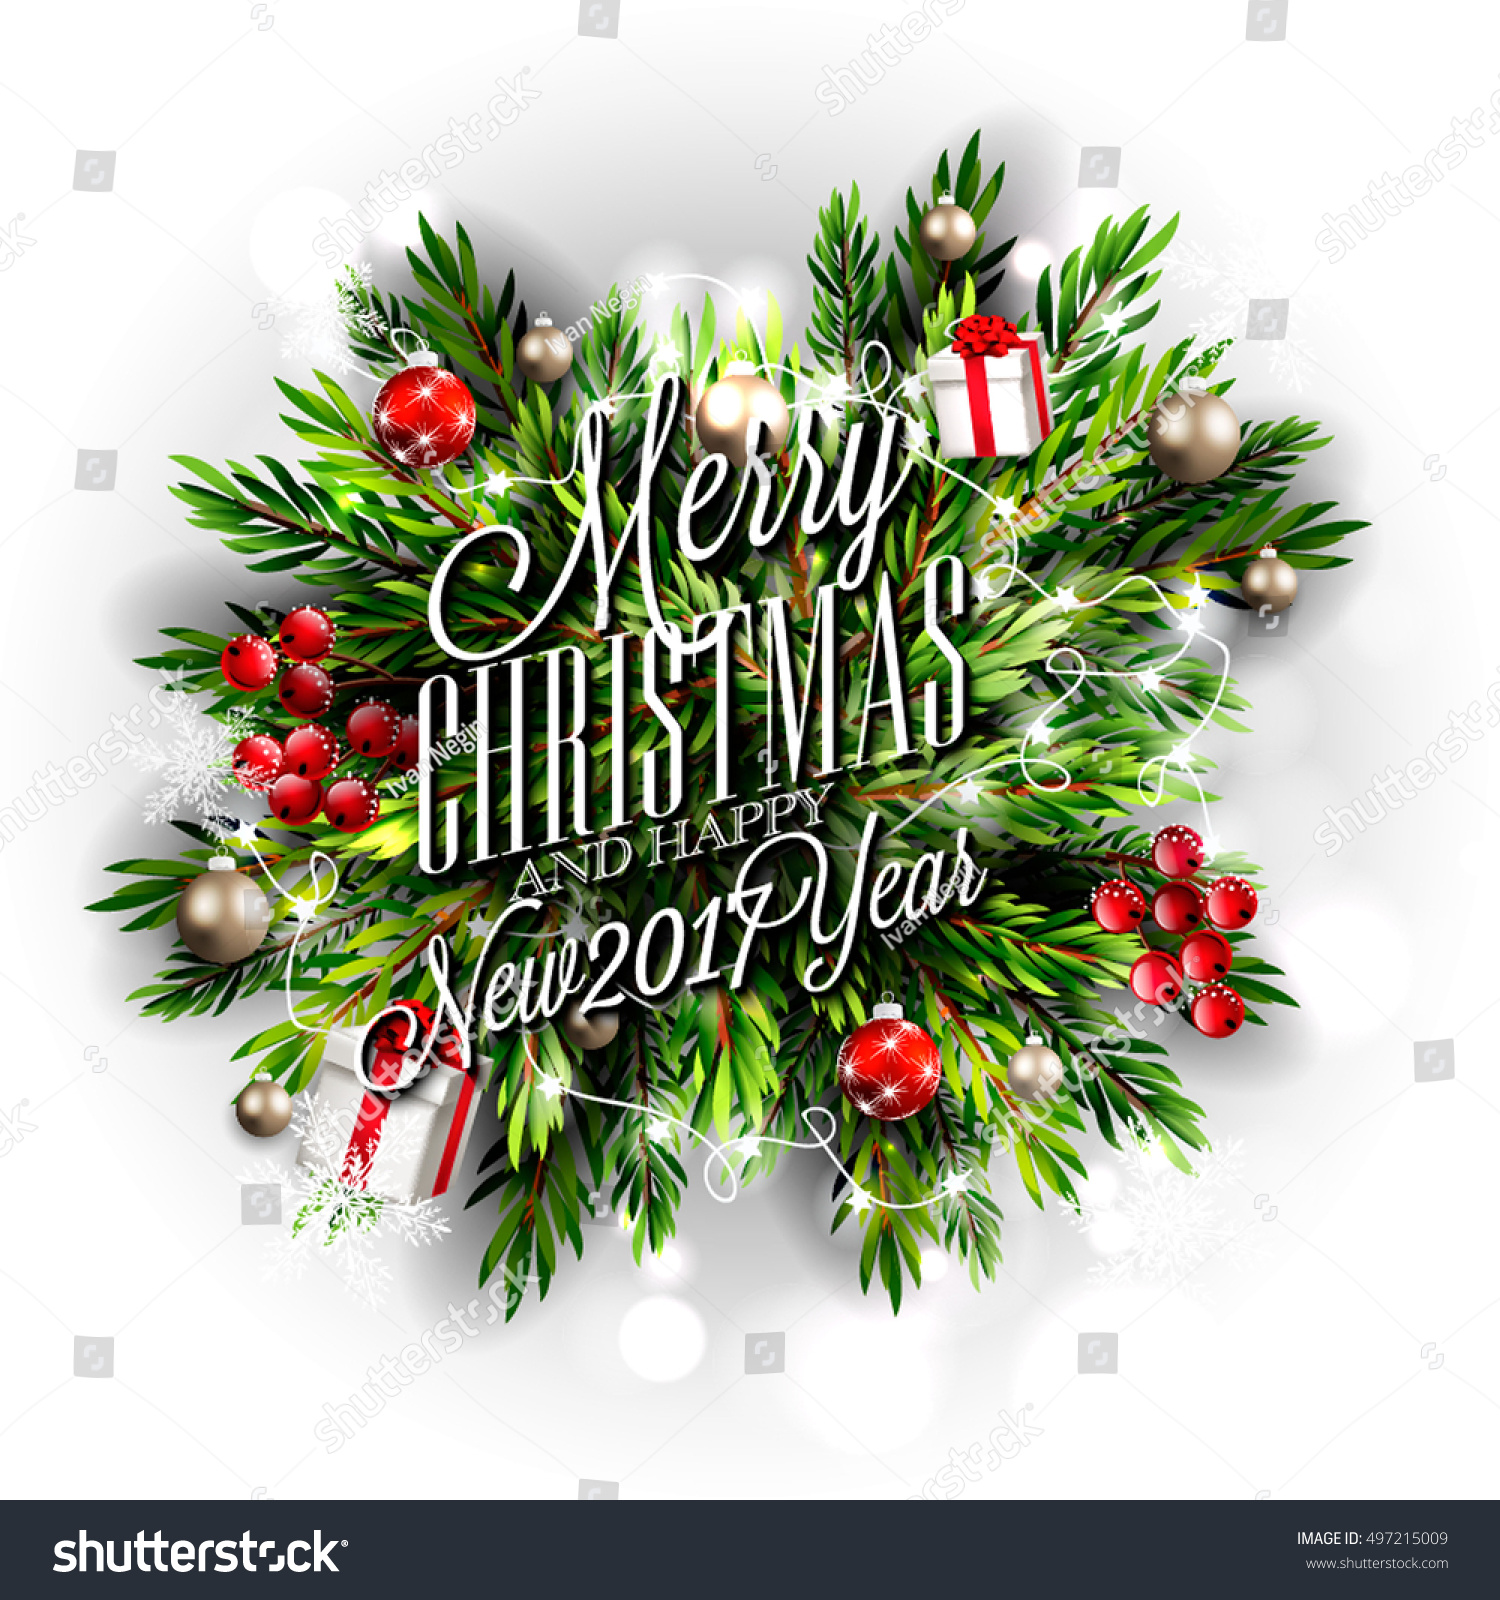 Merry Christmas Happy New Year Invitation Stock Vector 497215009 - Shutterstock